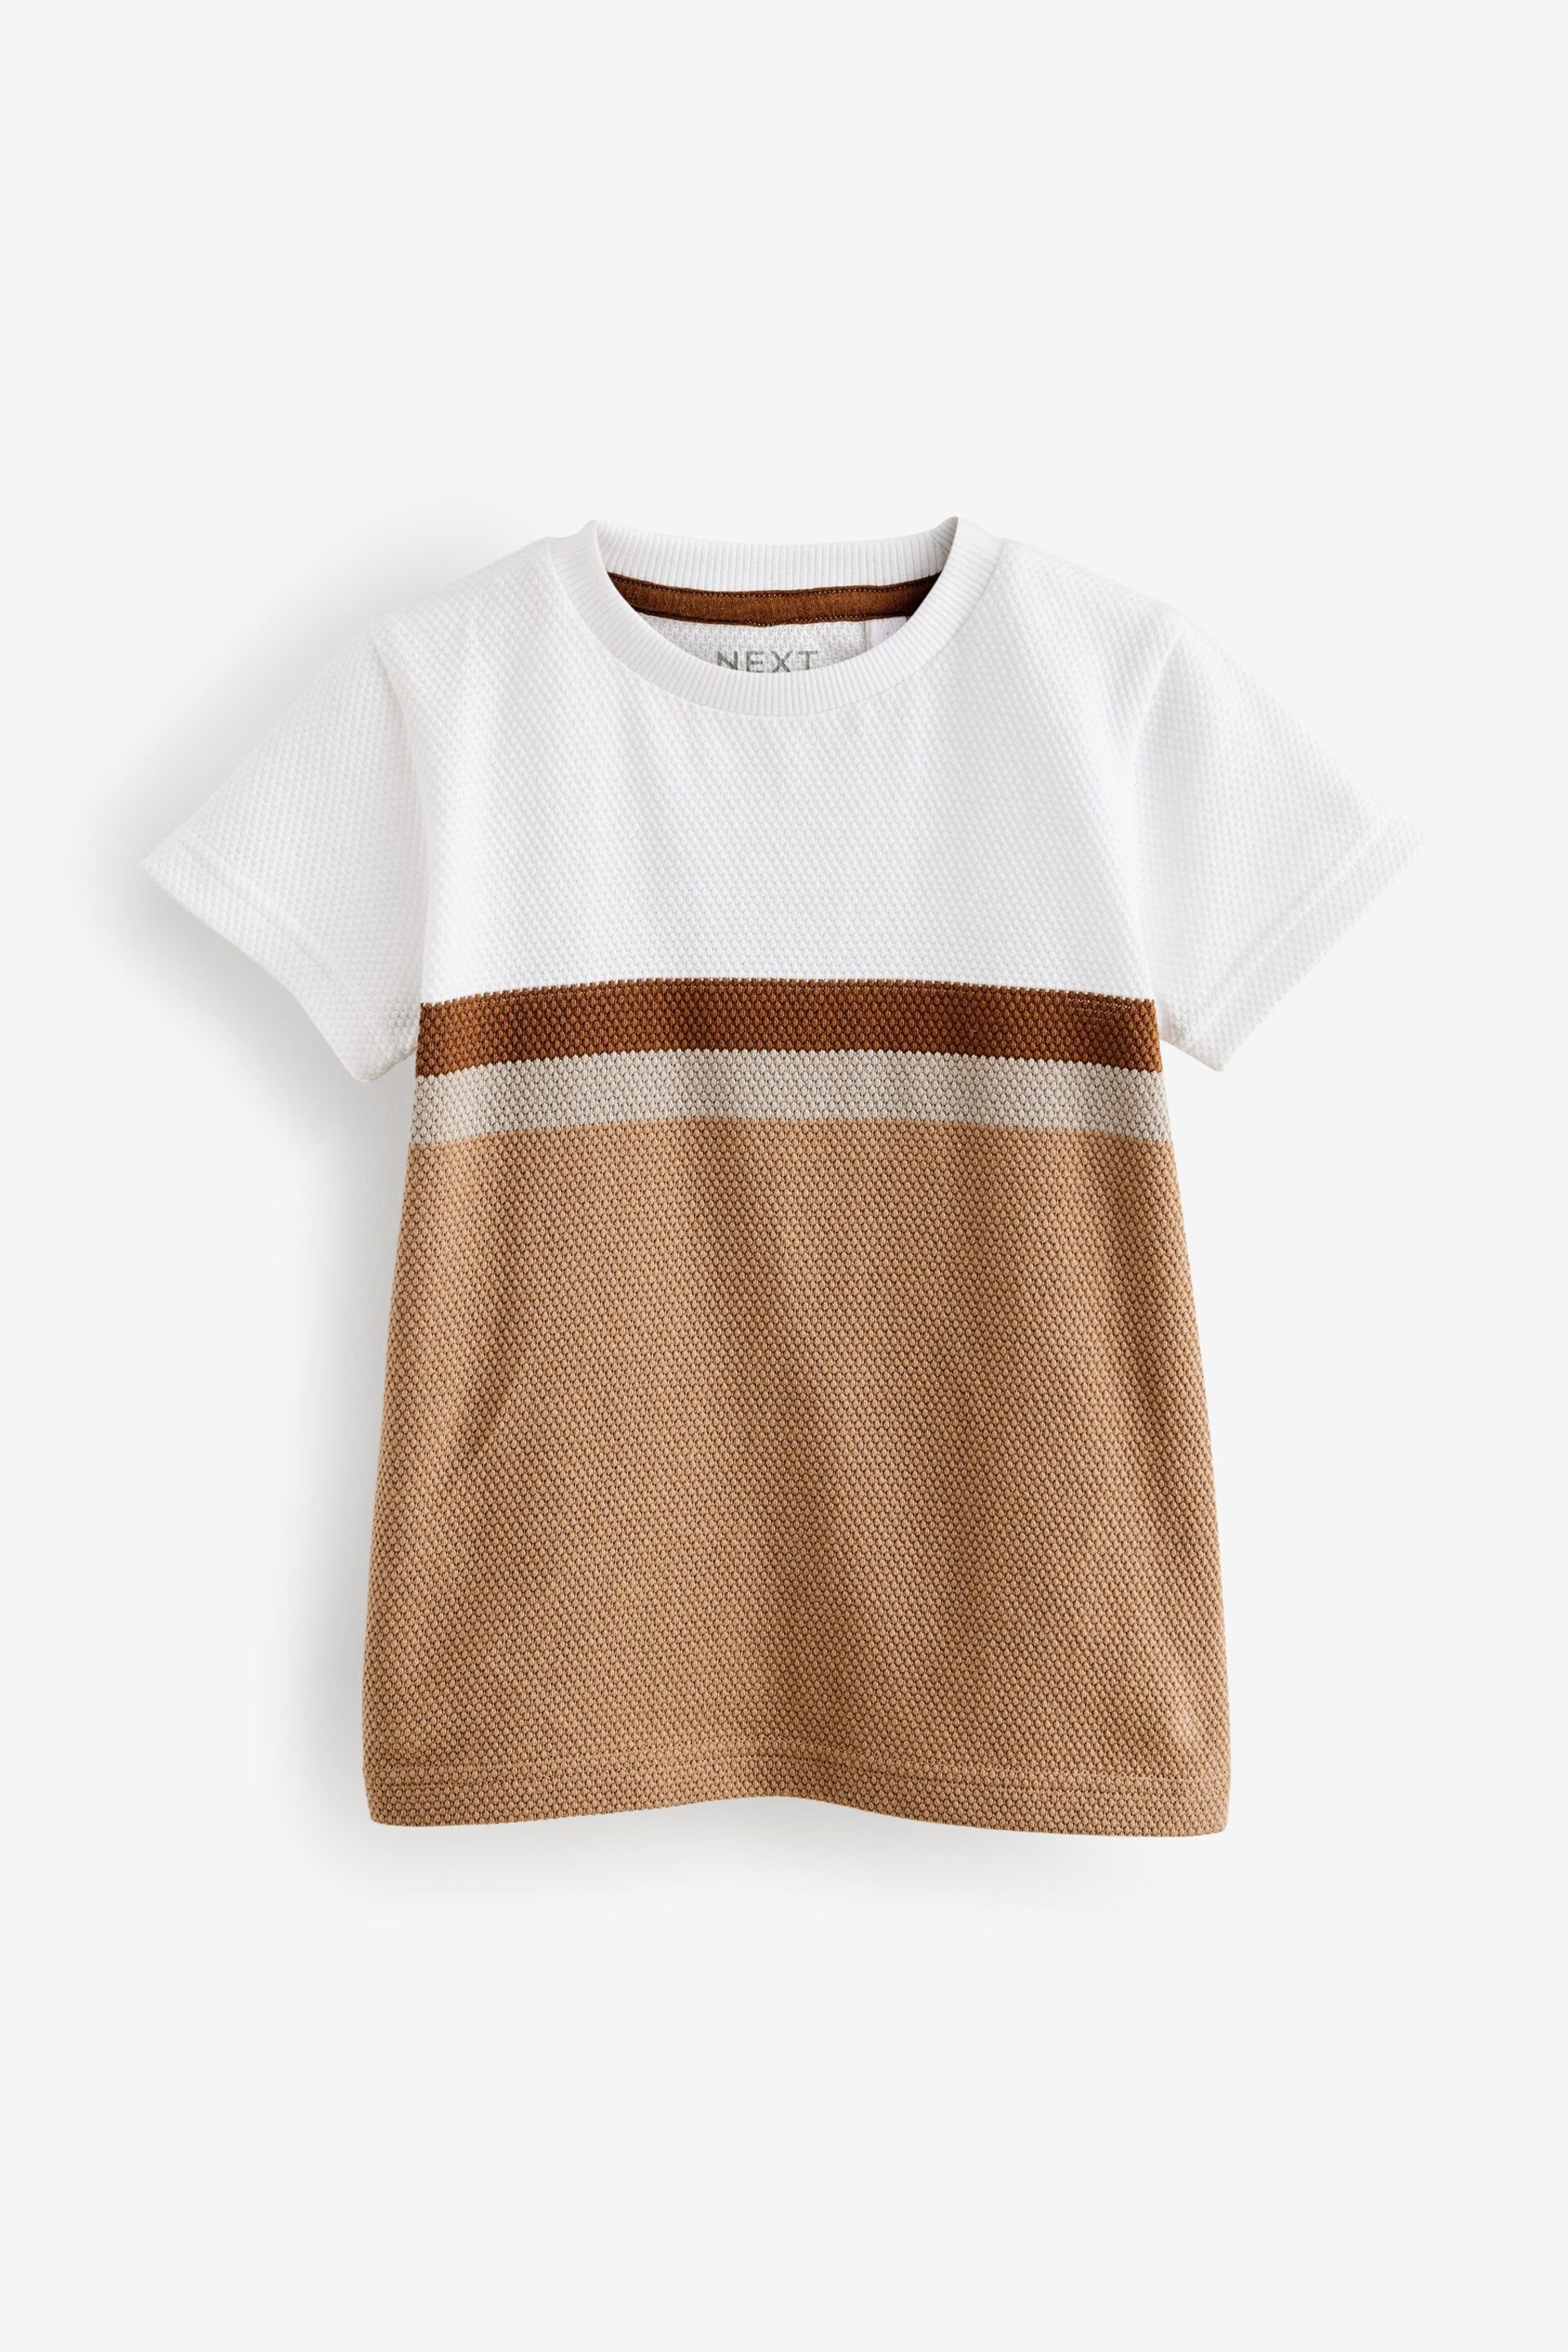 Tan Brown Short Sleeve Textured Stripe T-Shirt (3mths-7yrs) - Image 4 of 6